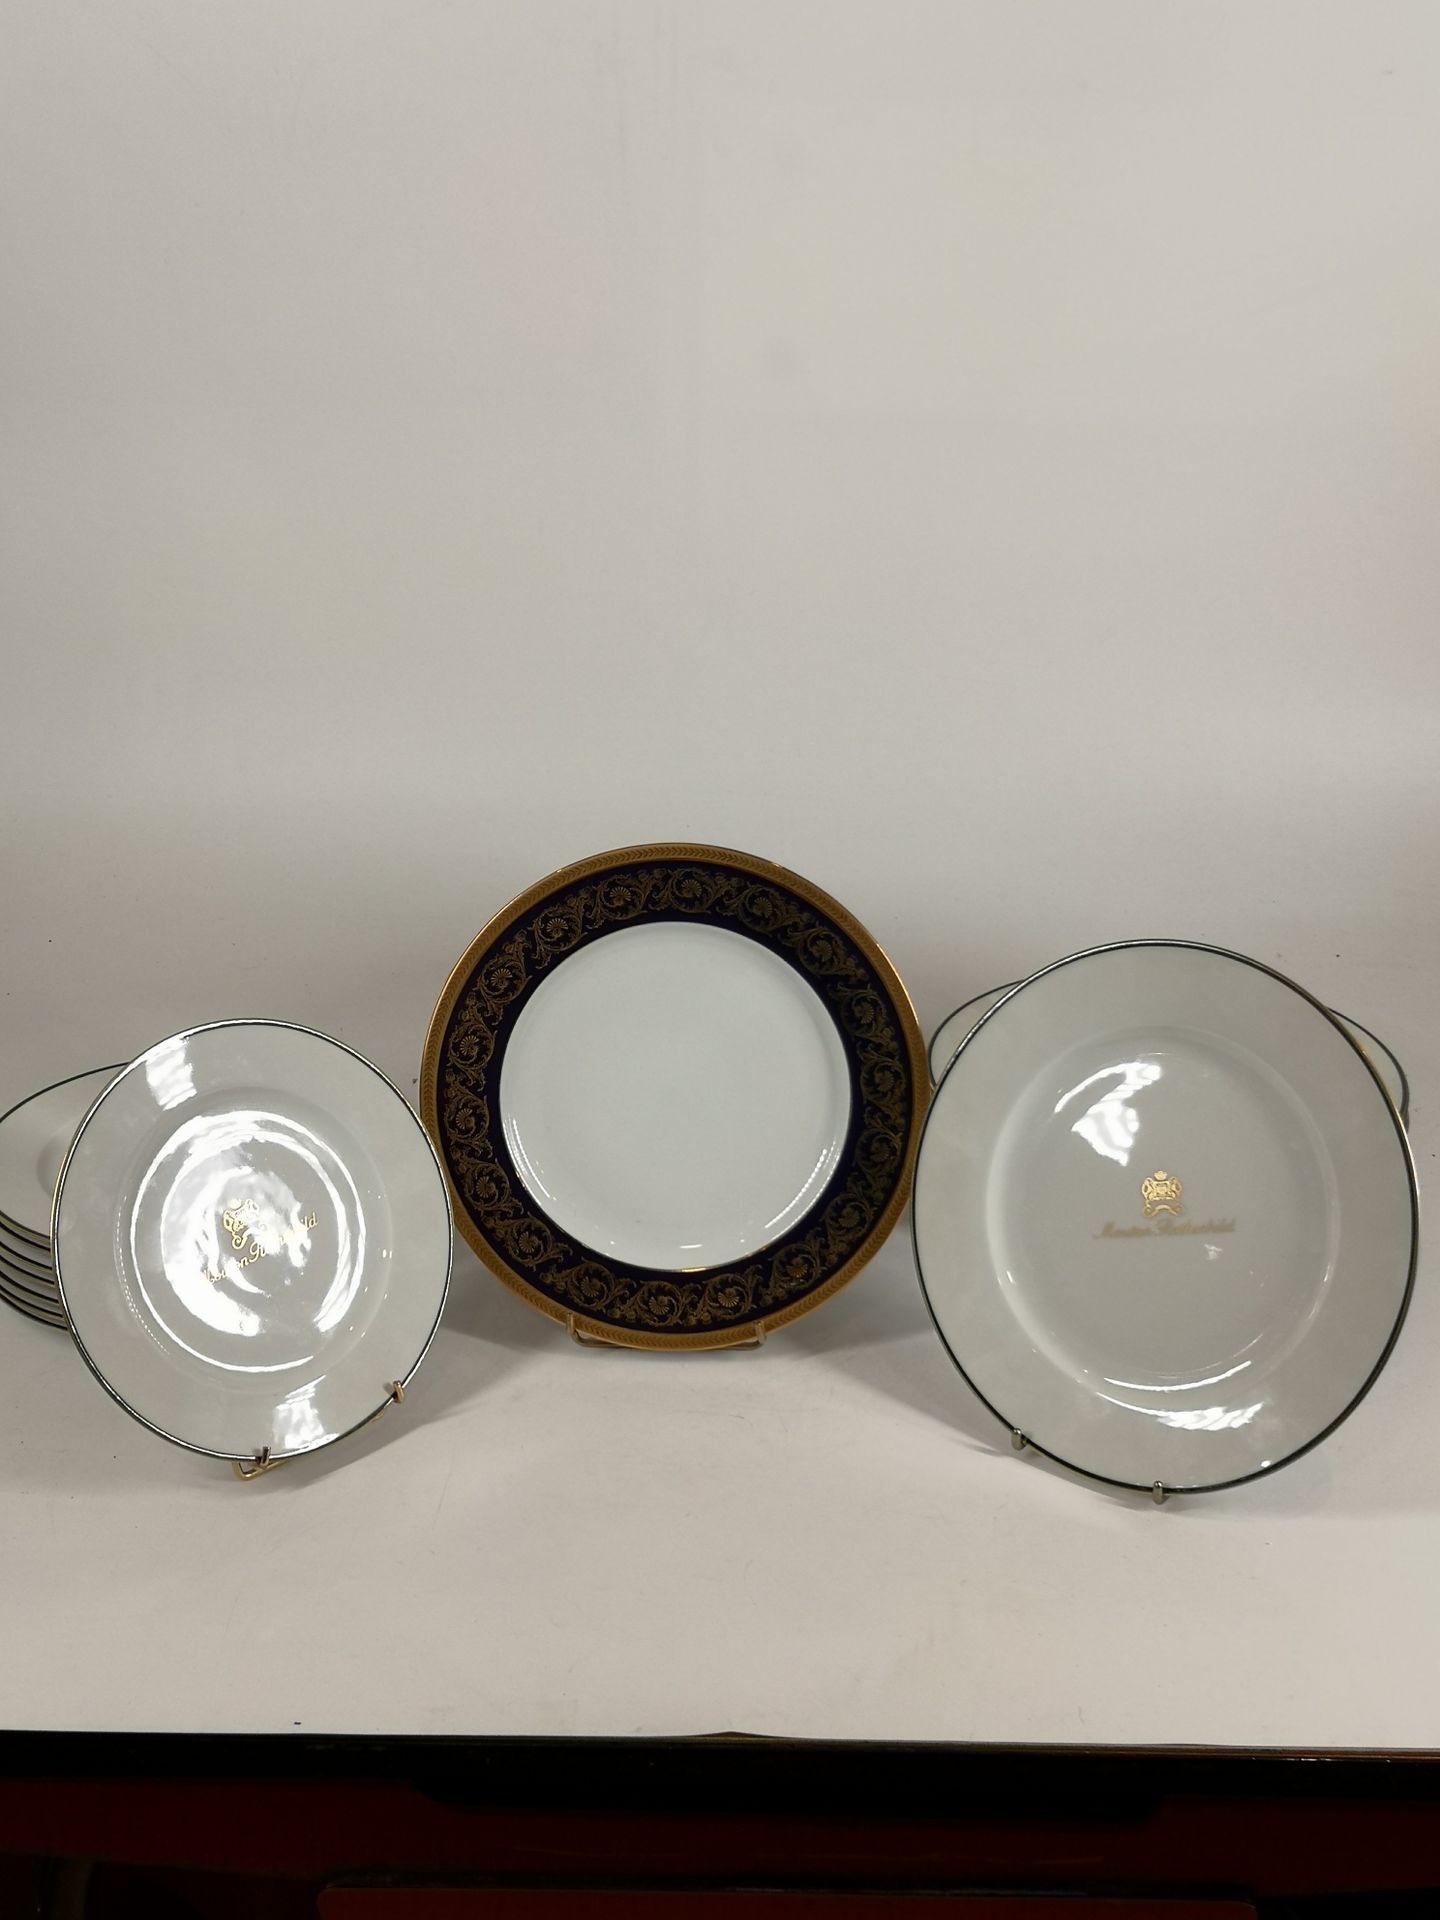 Null 木桐酒庄
金锉瓷餐具。它由七个中间标有 "Mouton Rothschild "字样的餐盘、十个餐盘和八个甜点盘组成。
餐盘和大盘直径：26 厘米